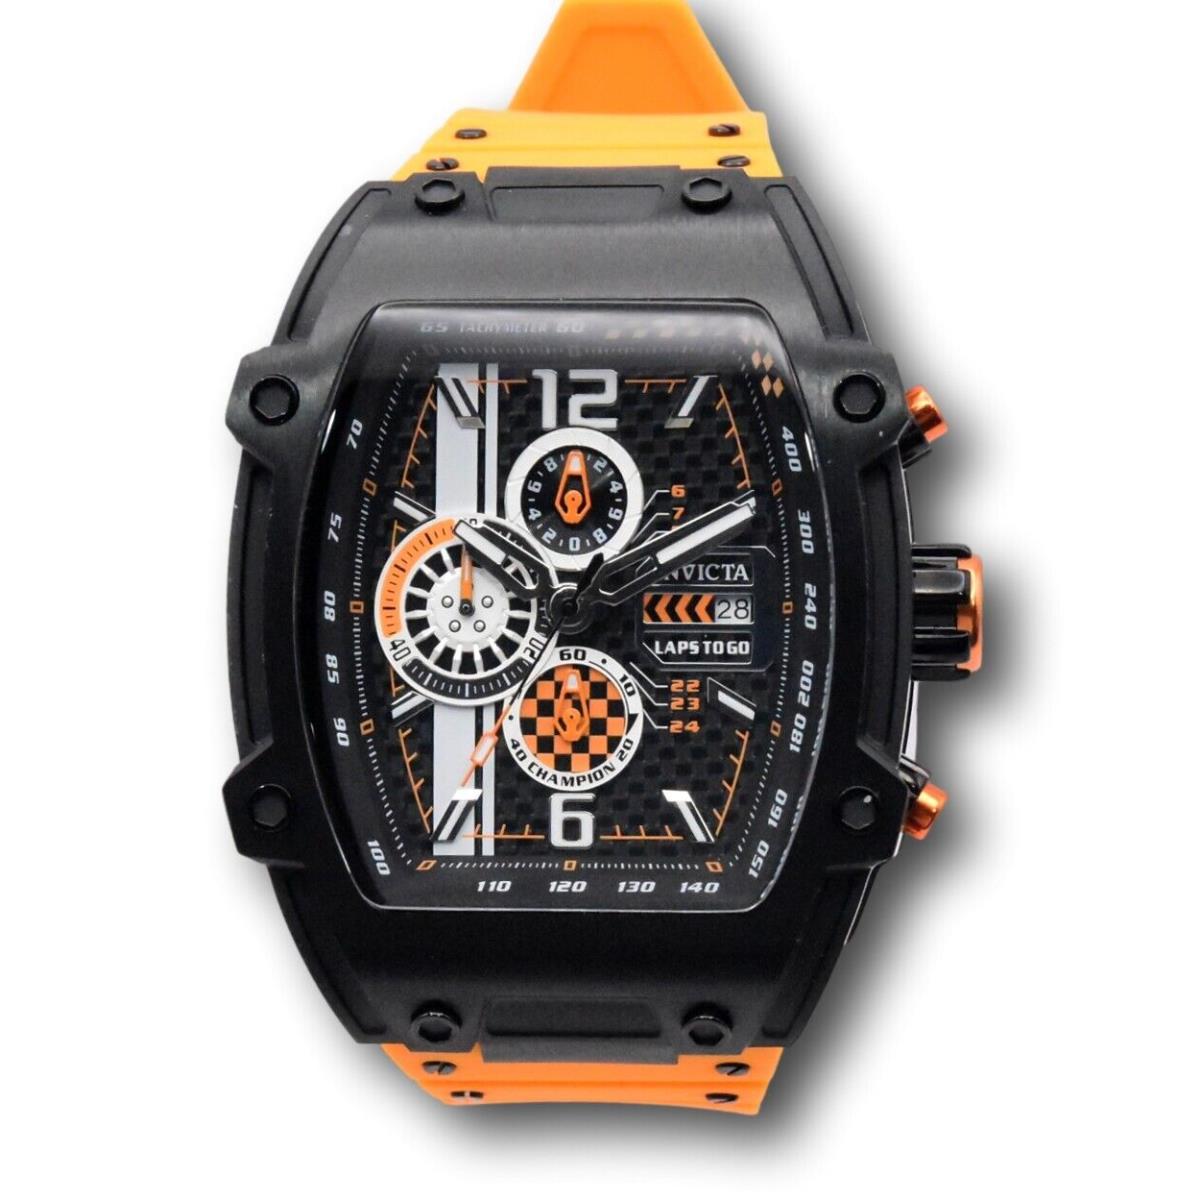 Invicta S1 Rally Diablo Men`s 48mm Large Carbon Fiber Chronograph Watch 44136 - Dial: Black Multicolor Orange White, Band: Orange, Bezel: Black